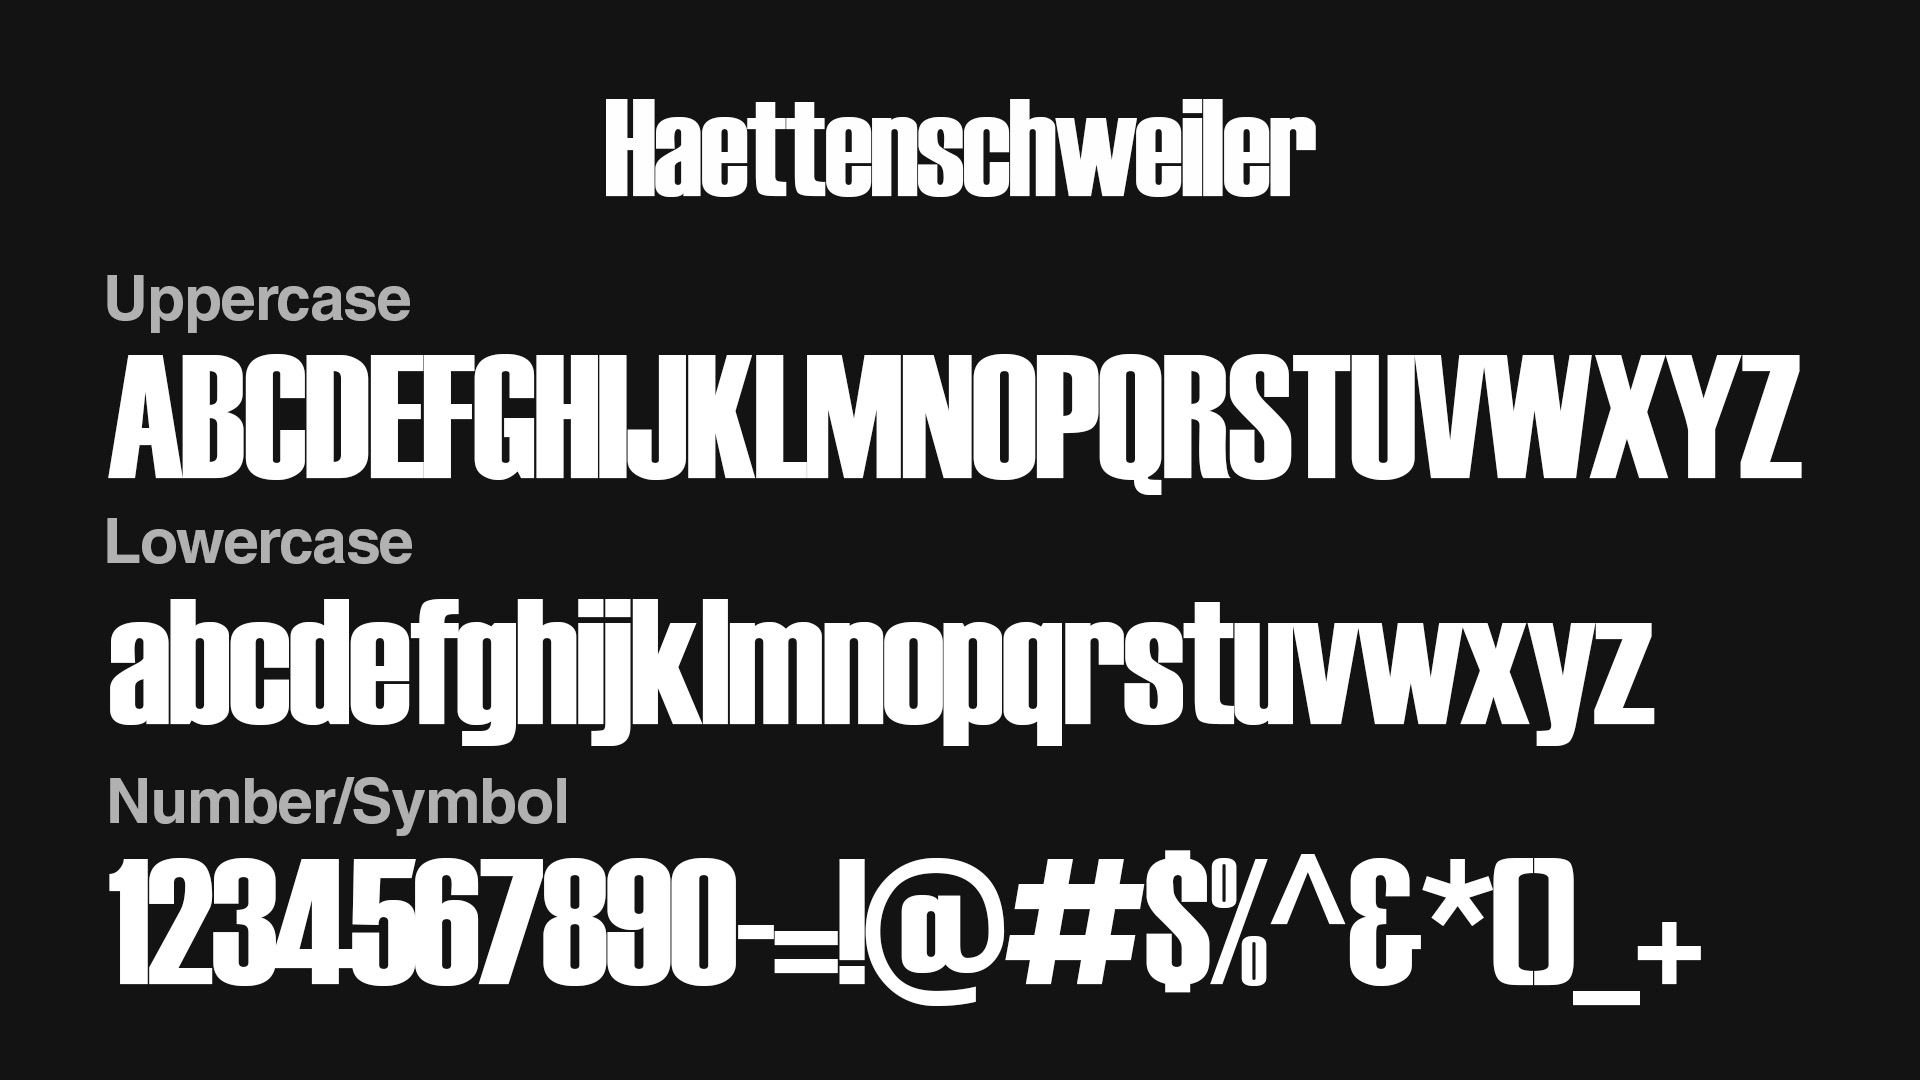 Complete Haettenschweiler font family in white on a dark gray background.